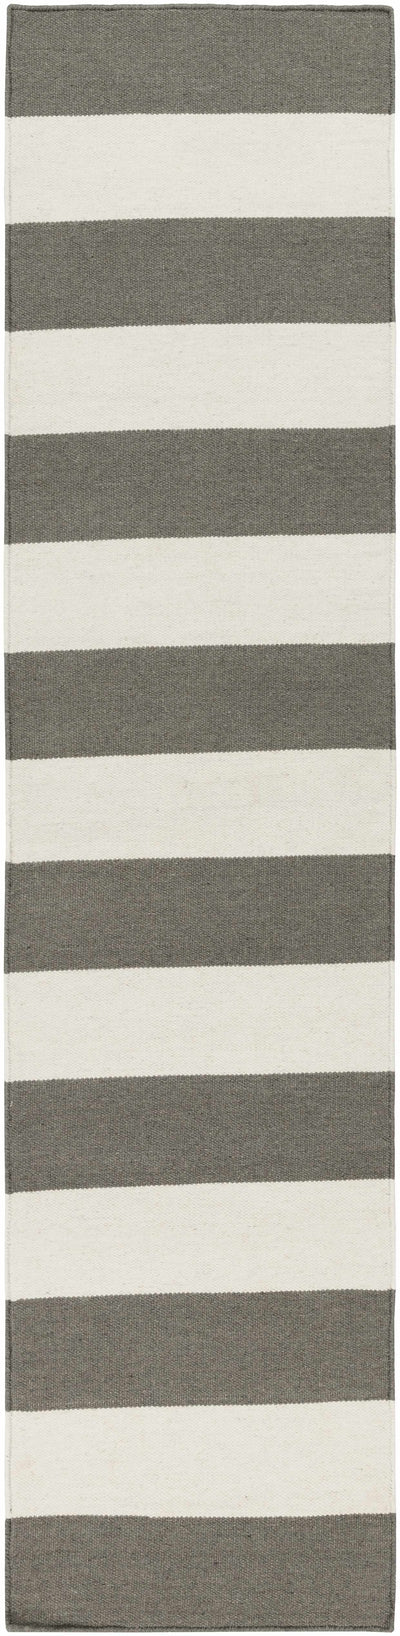 Faithful White/Gray Striped Wool Rug - Clearance